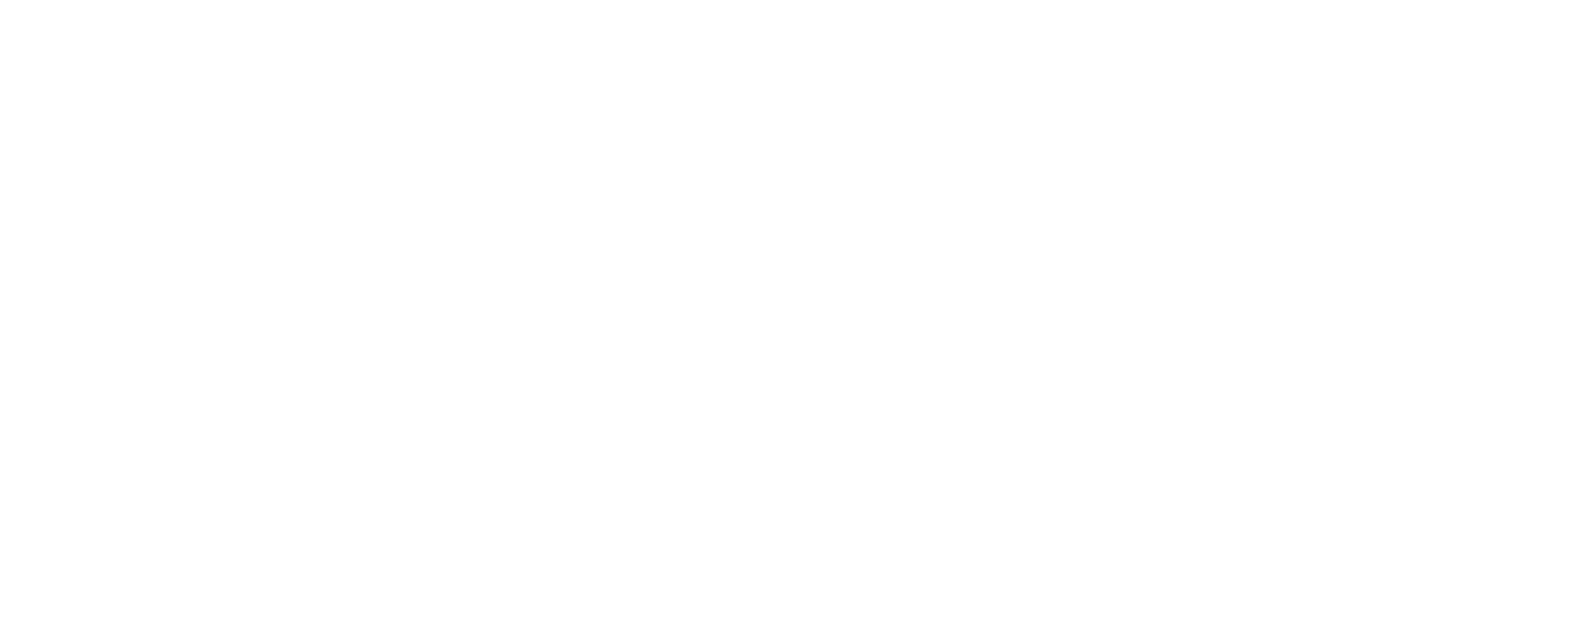 Arbe Robotics logo grand pour les fonds sombres (PNG transparent)